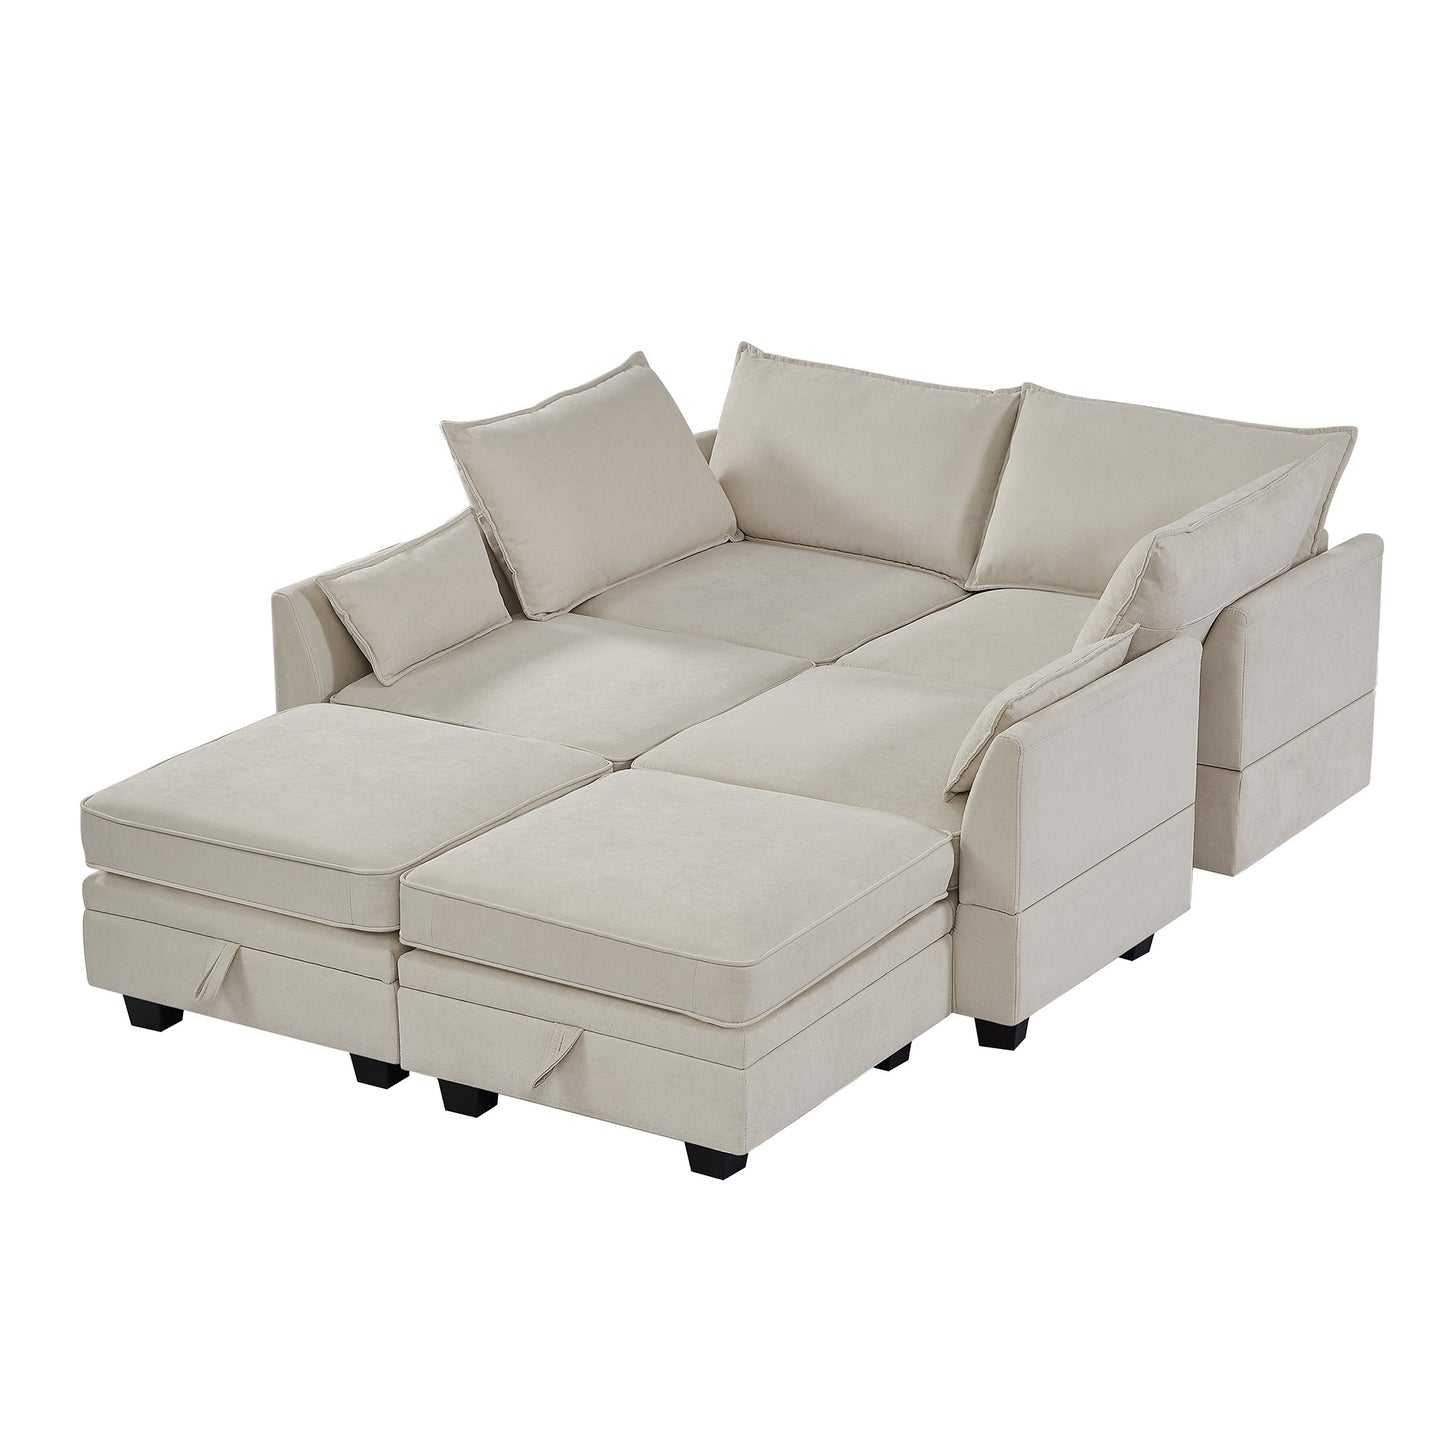 1st Choice Luxury Modern Large U-Shape Sectional Sofa in Beige Linen